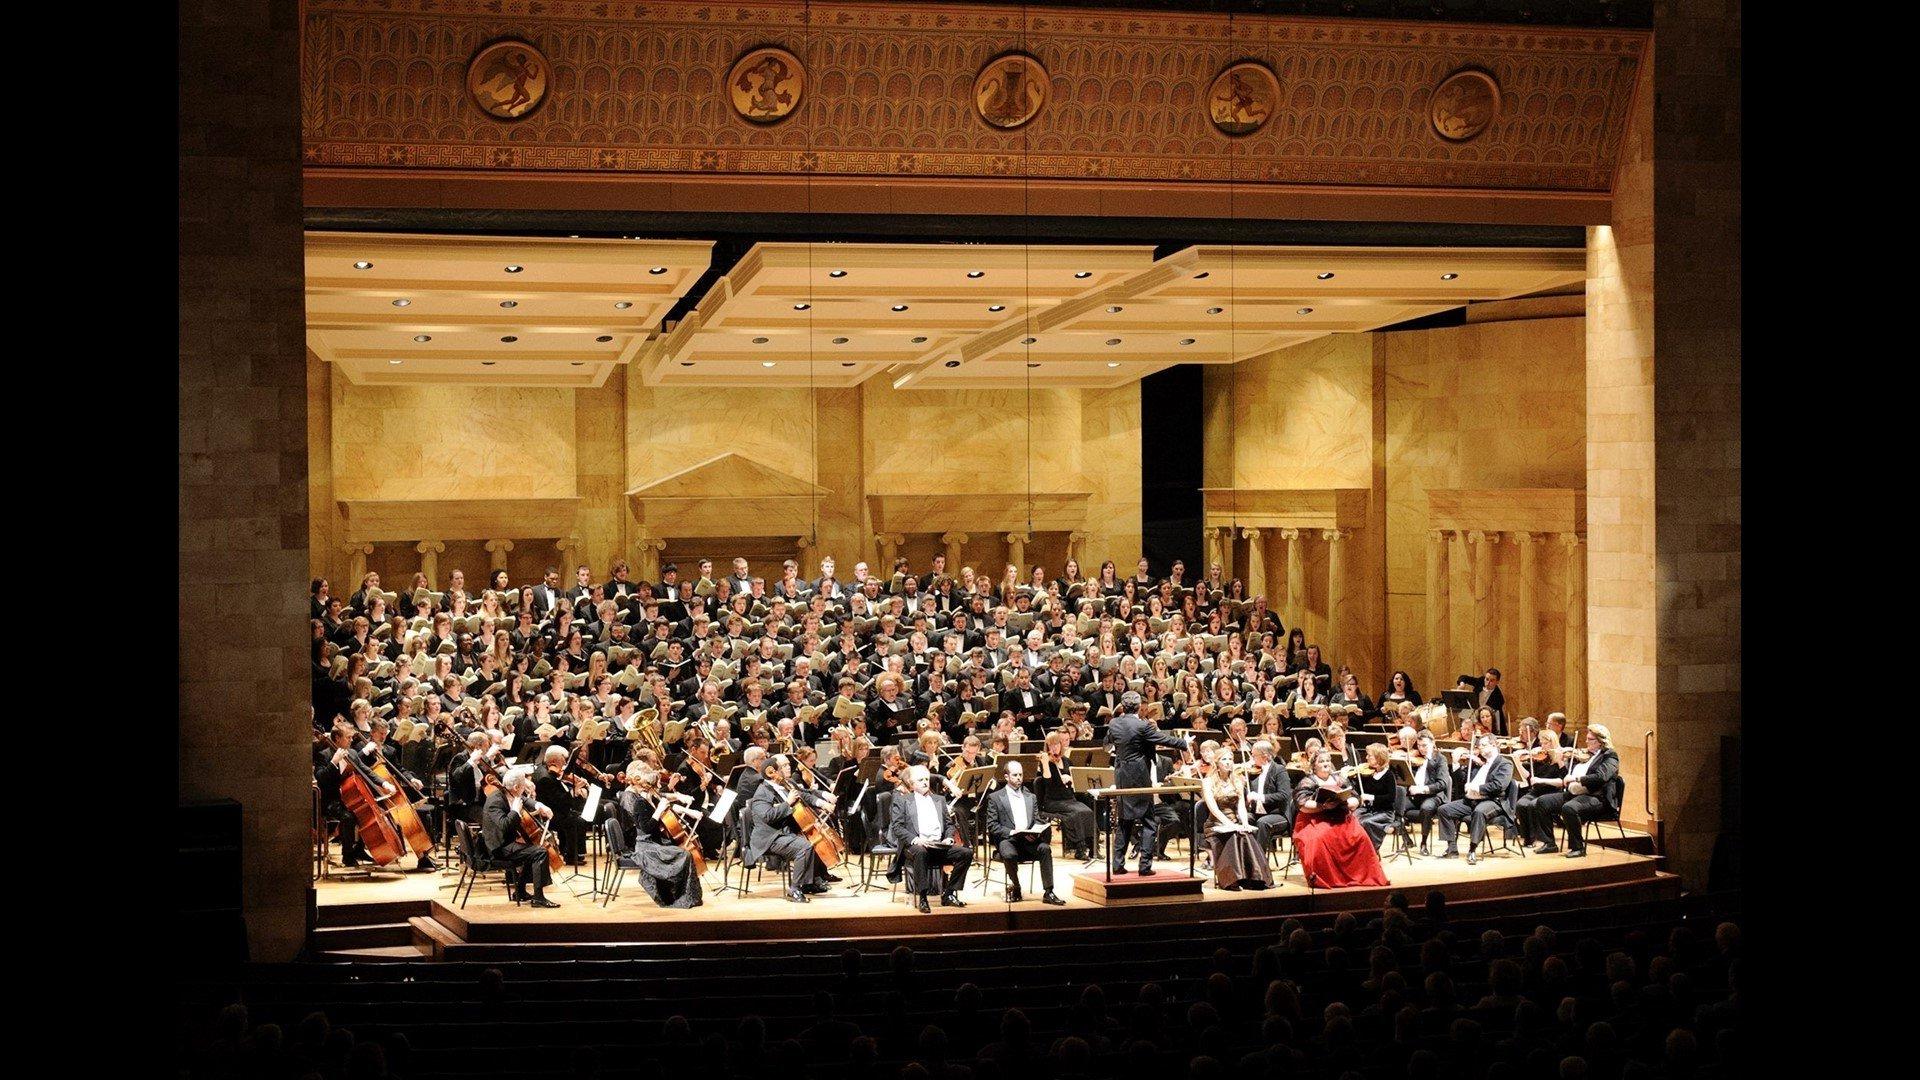 BGSU Choirs with Toledo Symphony